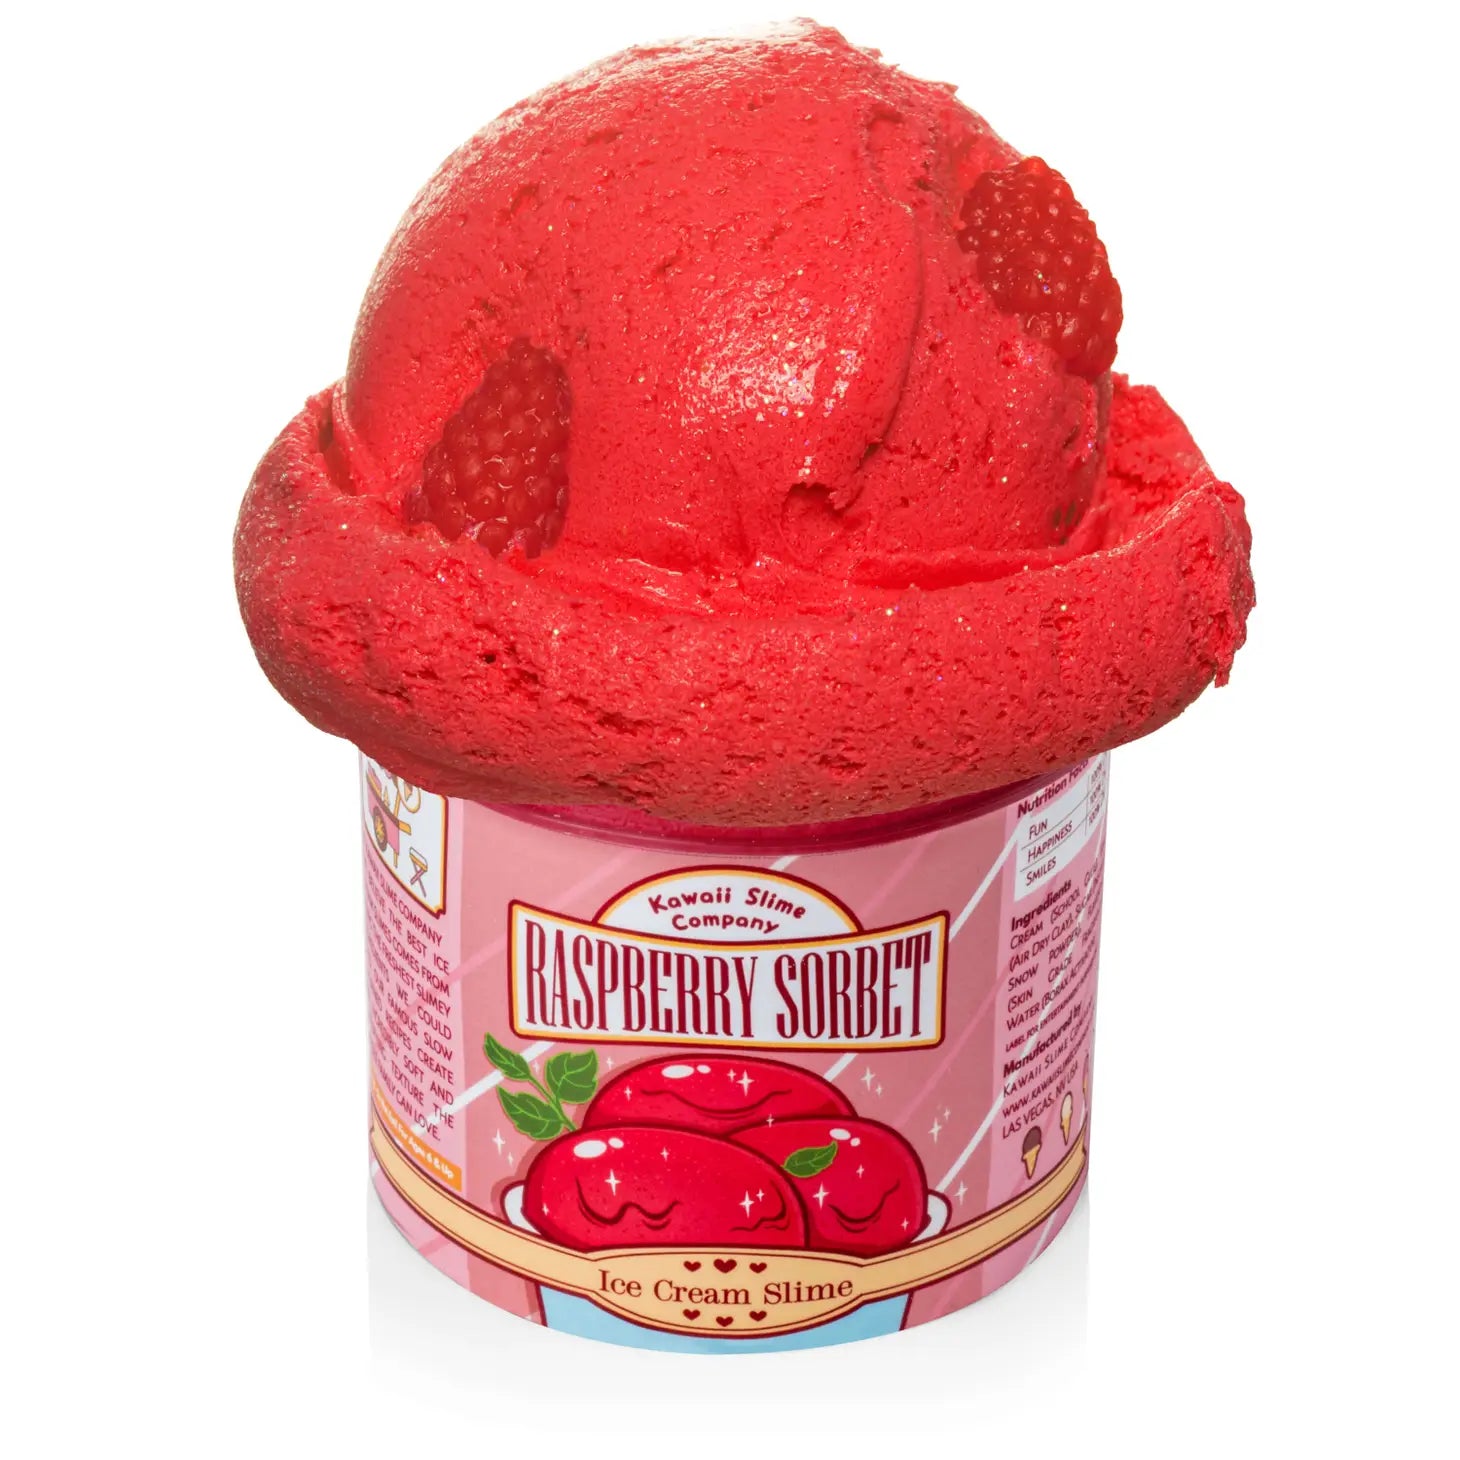 Raspberry Sorbet Ice Cream Slime by Kawaii Slime